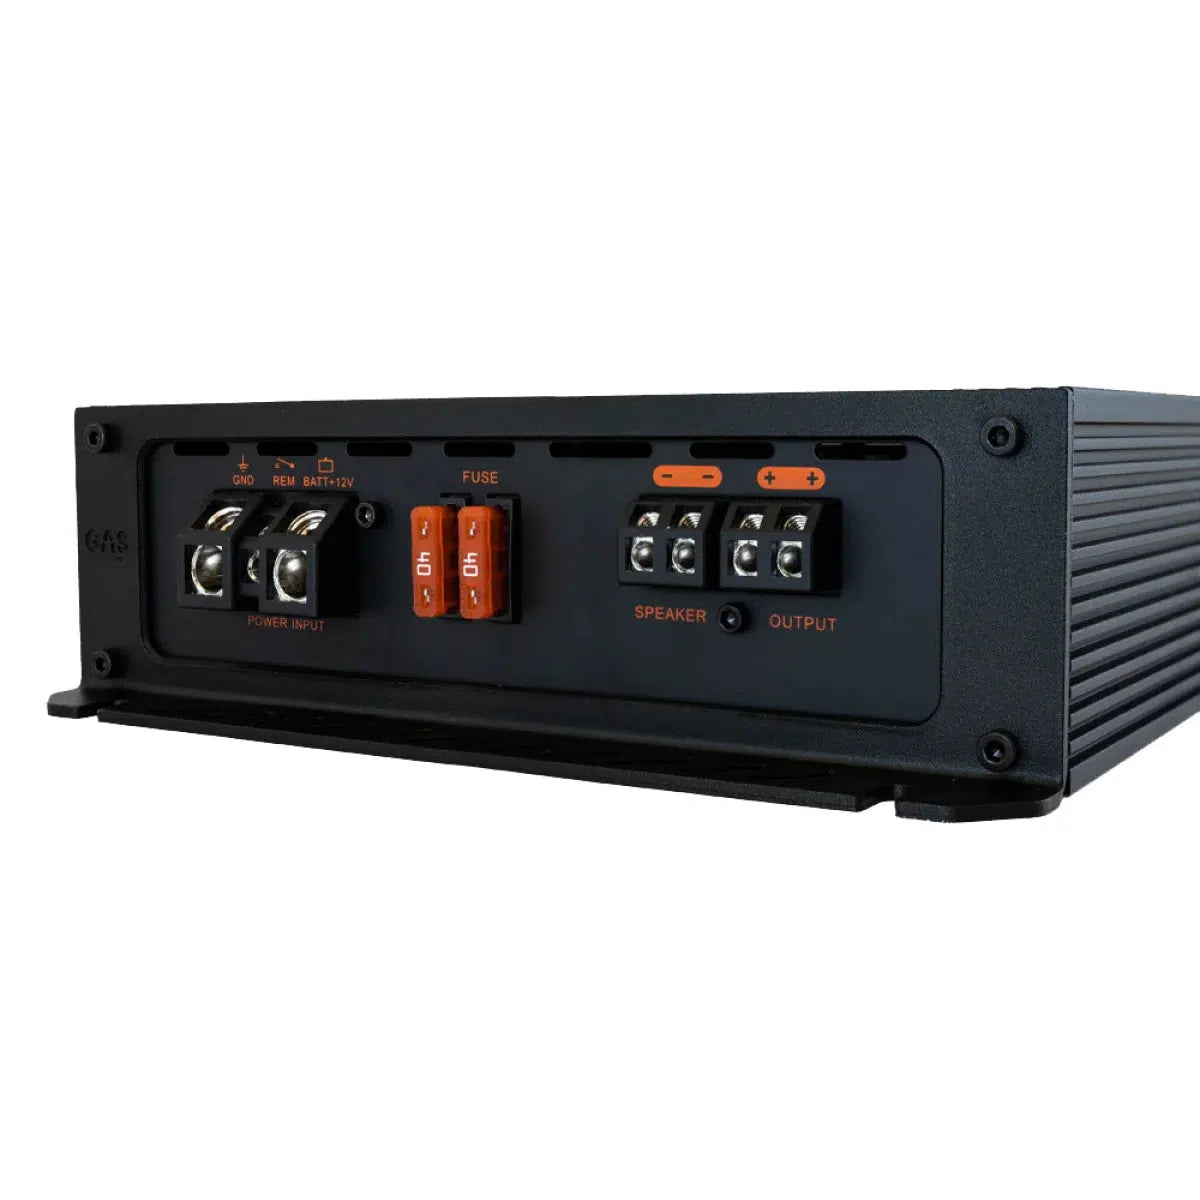 GAS-Max A2 8001D-1-canal Amplificateur-Masori.fr